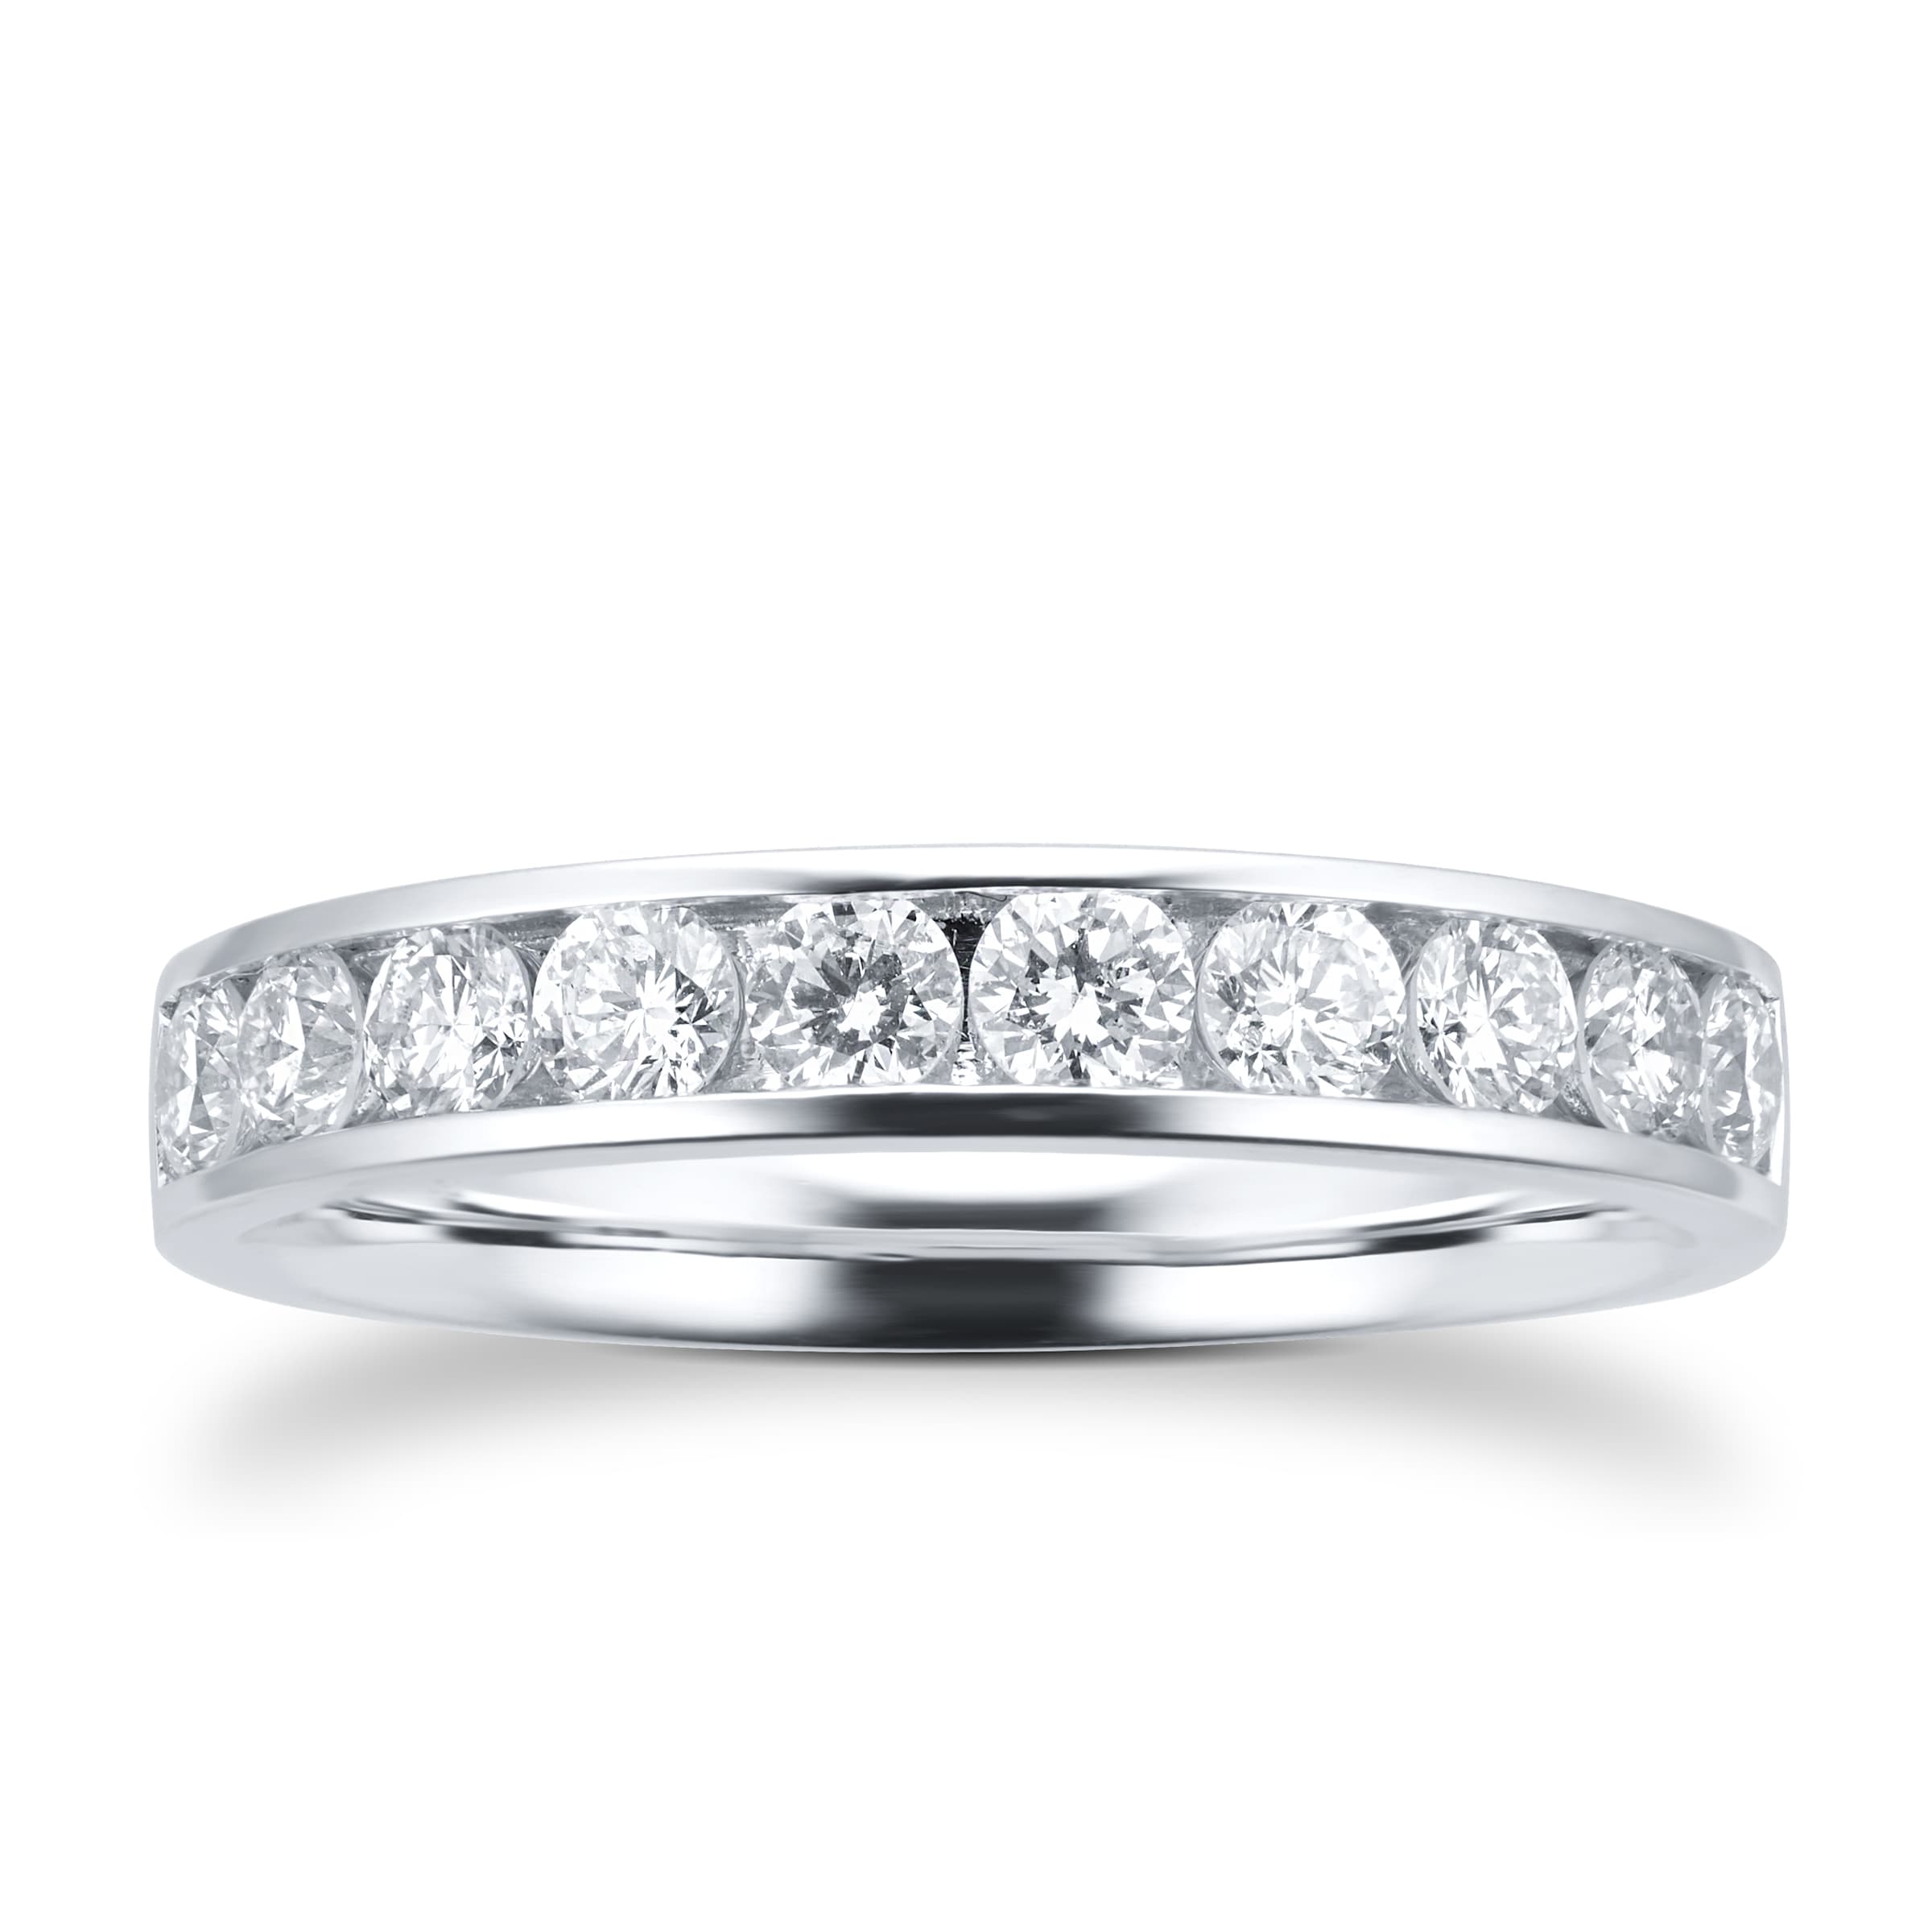 18ct White Gold 0.75ct Brilliant Cut Goldsmiths Brightest Diamond Eternity Ring - Ring Size N